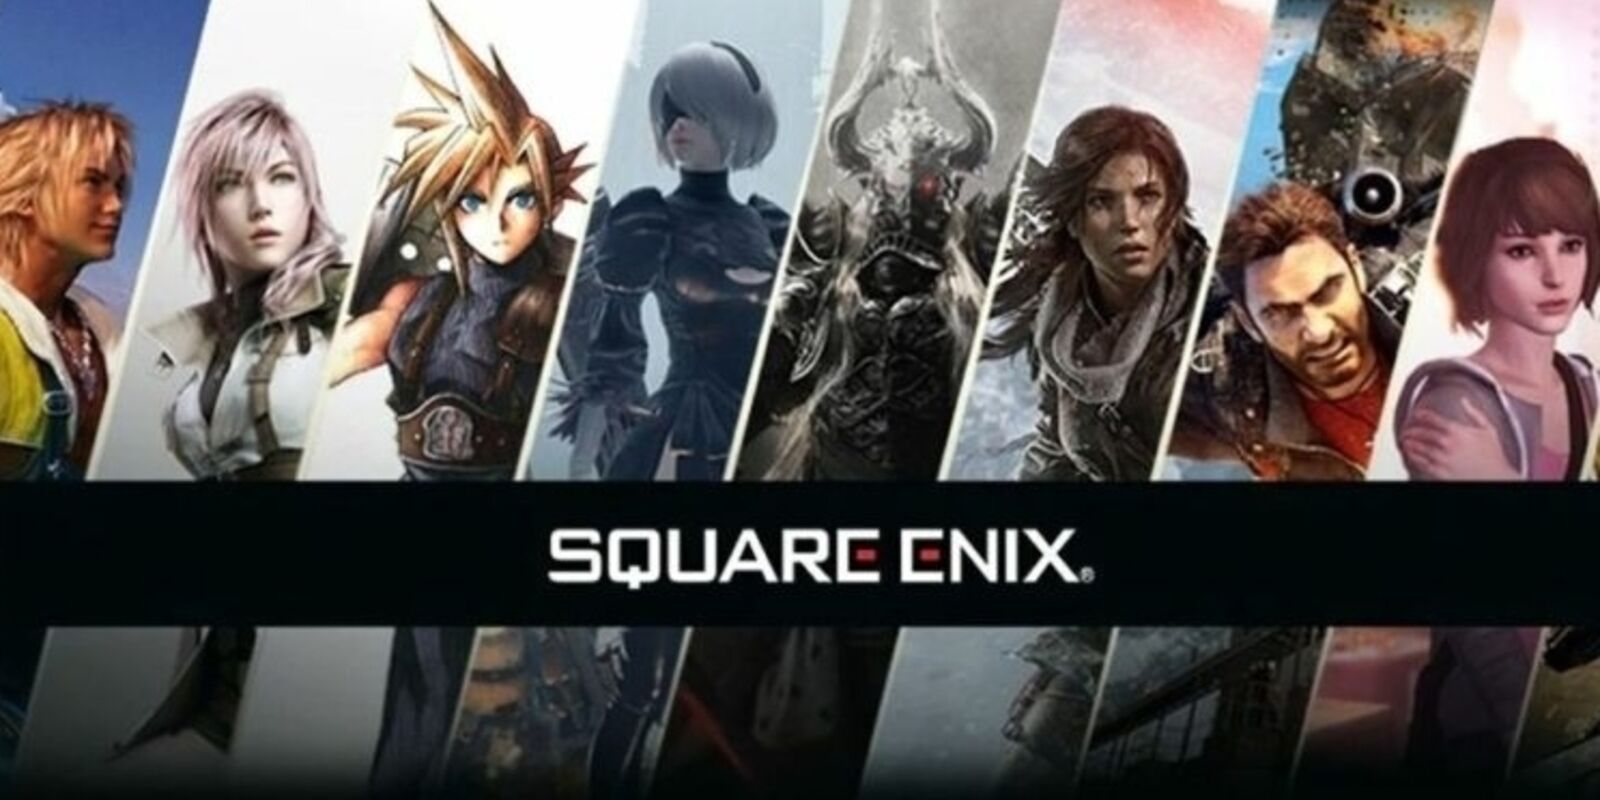 Top 10 Square Enix Video Games